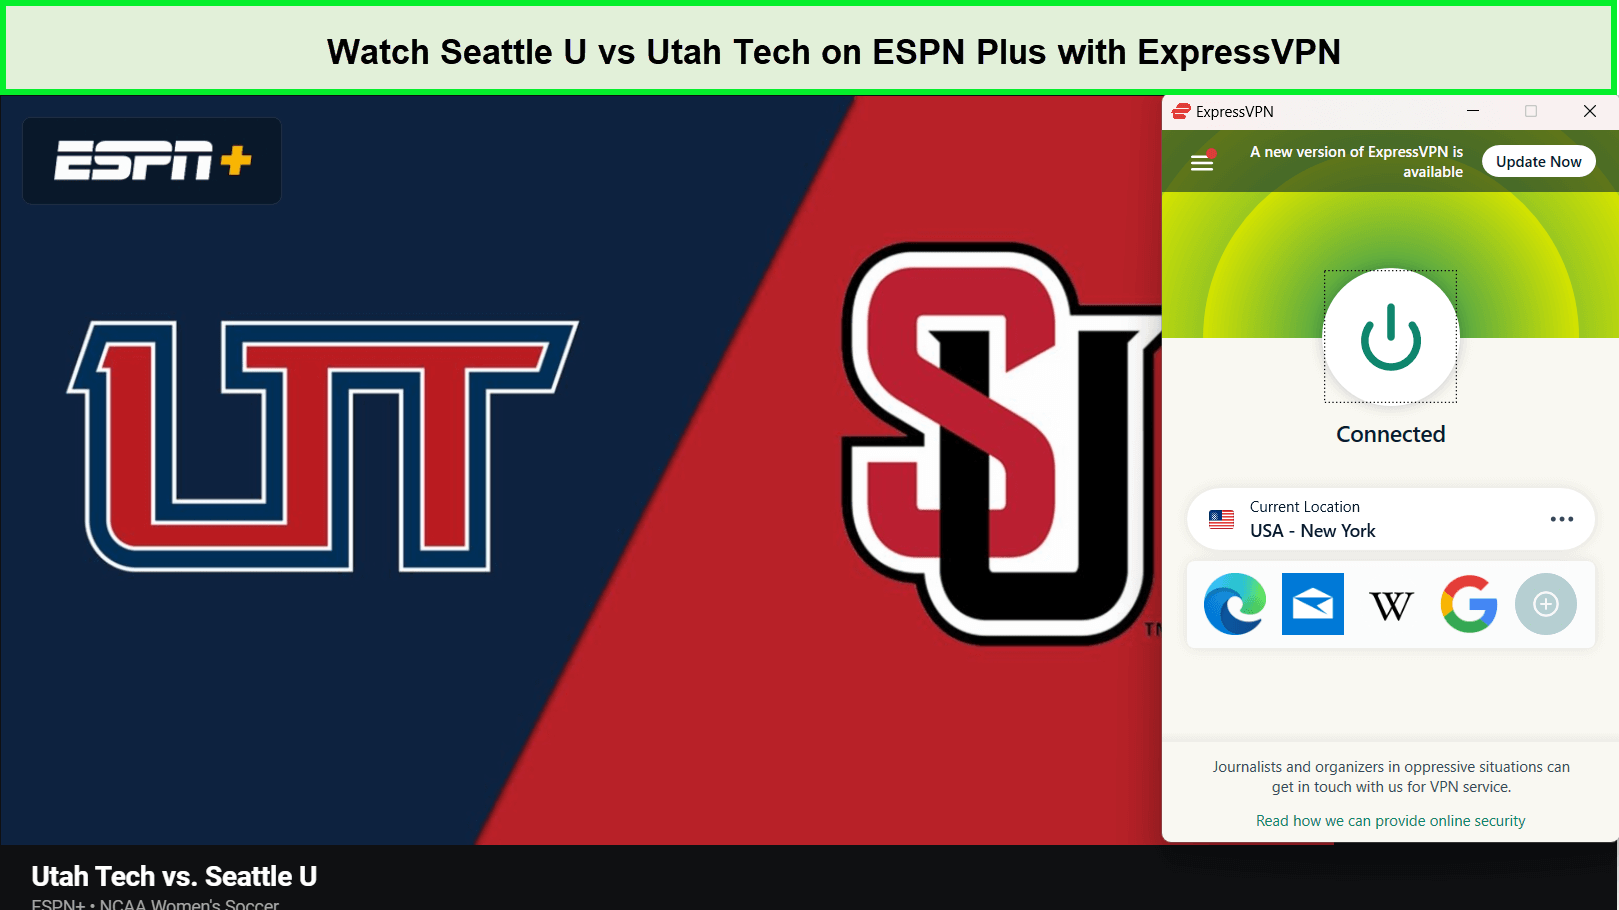  Ver-Seattle-U-vs-Utah-Tech- in - Espana -en-ESPN-Plus -en-ESPN-Plus -en-ESPN-Plus -en-ESPN-Plus -en-ESPN-Plus -en-ESPN-Plus -en-ESPN-Plus -en-ESPN-Plus -en-ESPN-Plus -en-ESPN-Plus -en-ESPN-Plus -en-ESPN-Plus -en-ESPN-Plus -en-ESPN-Plus -en-ESPN-Plus -en-ESPN-Plus -en-ESPN- 